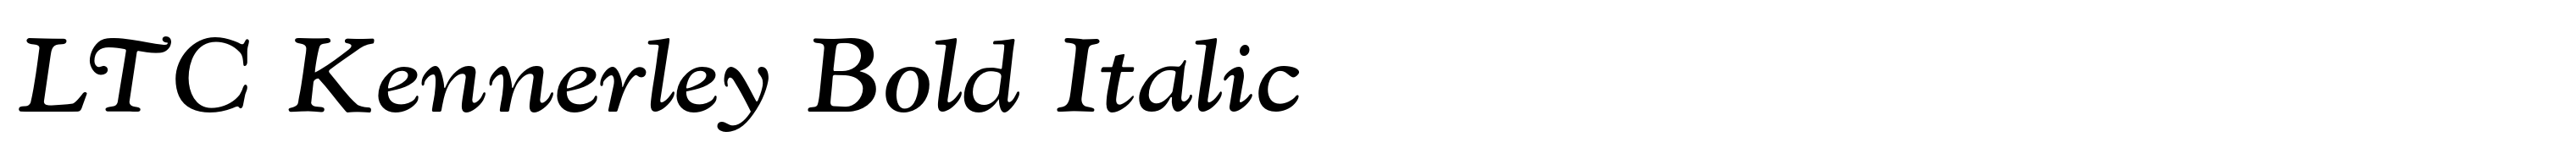 LTC Kennerley Bold Italic